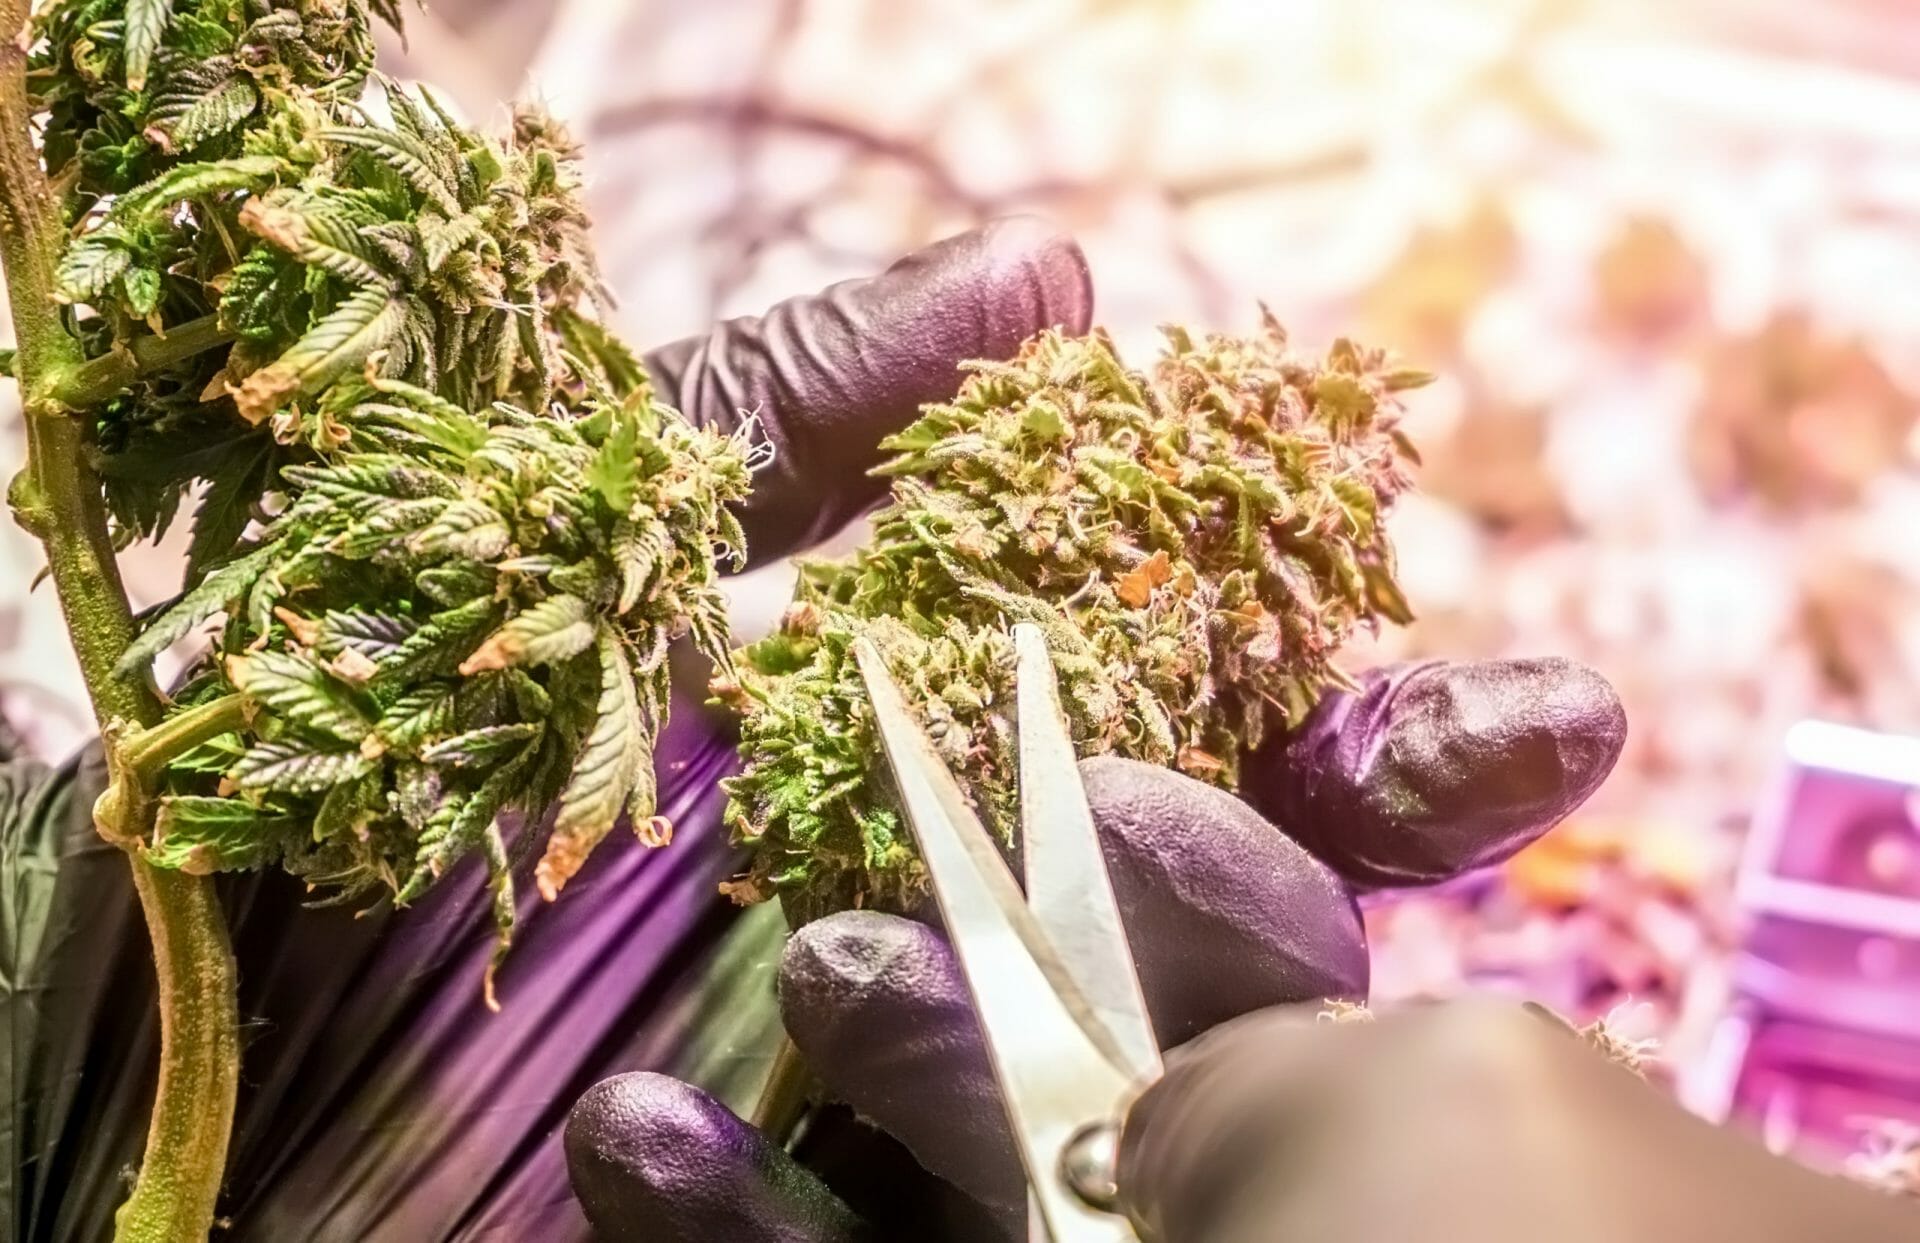 trimming cannabis legale